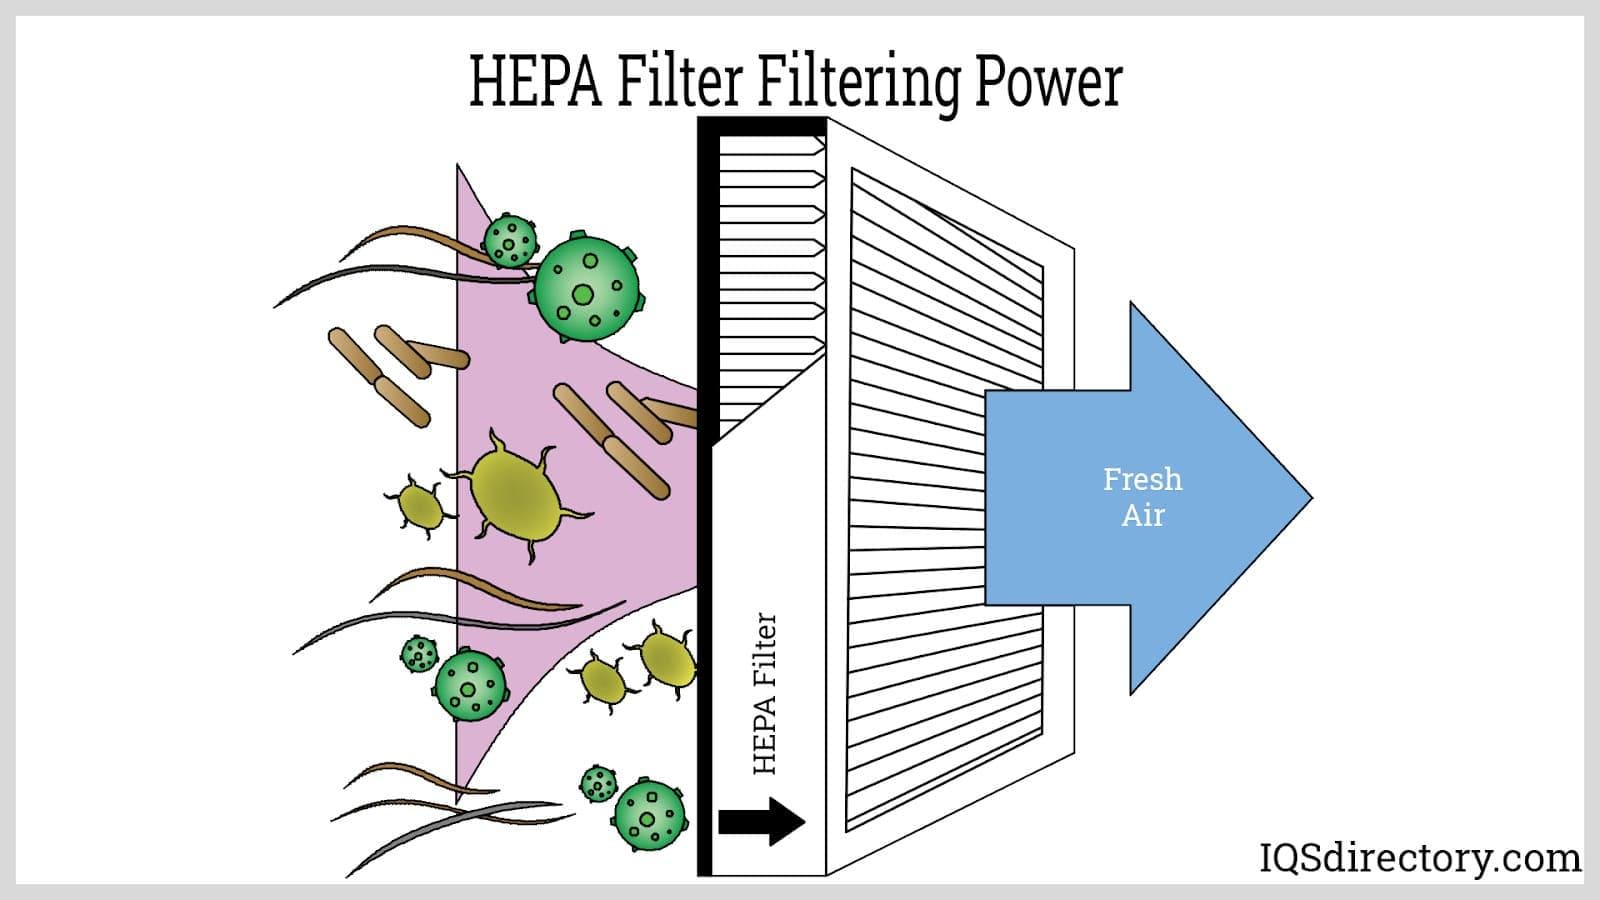 HEPA Filtering